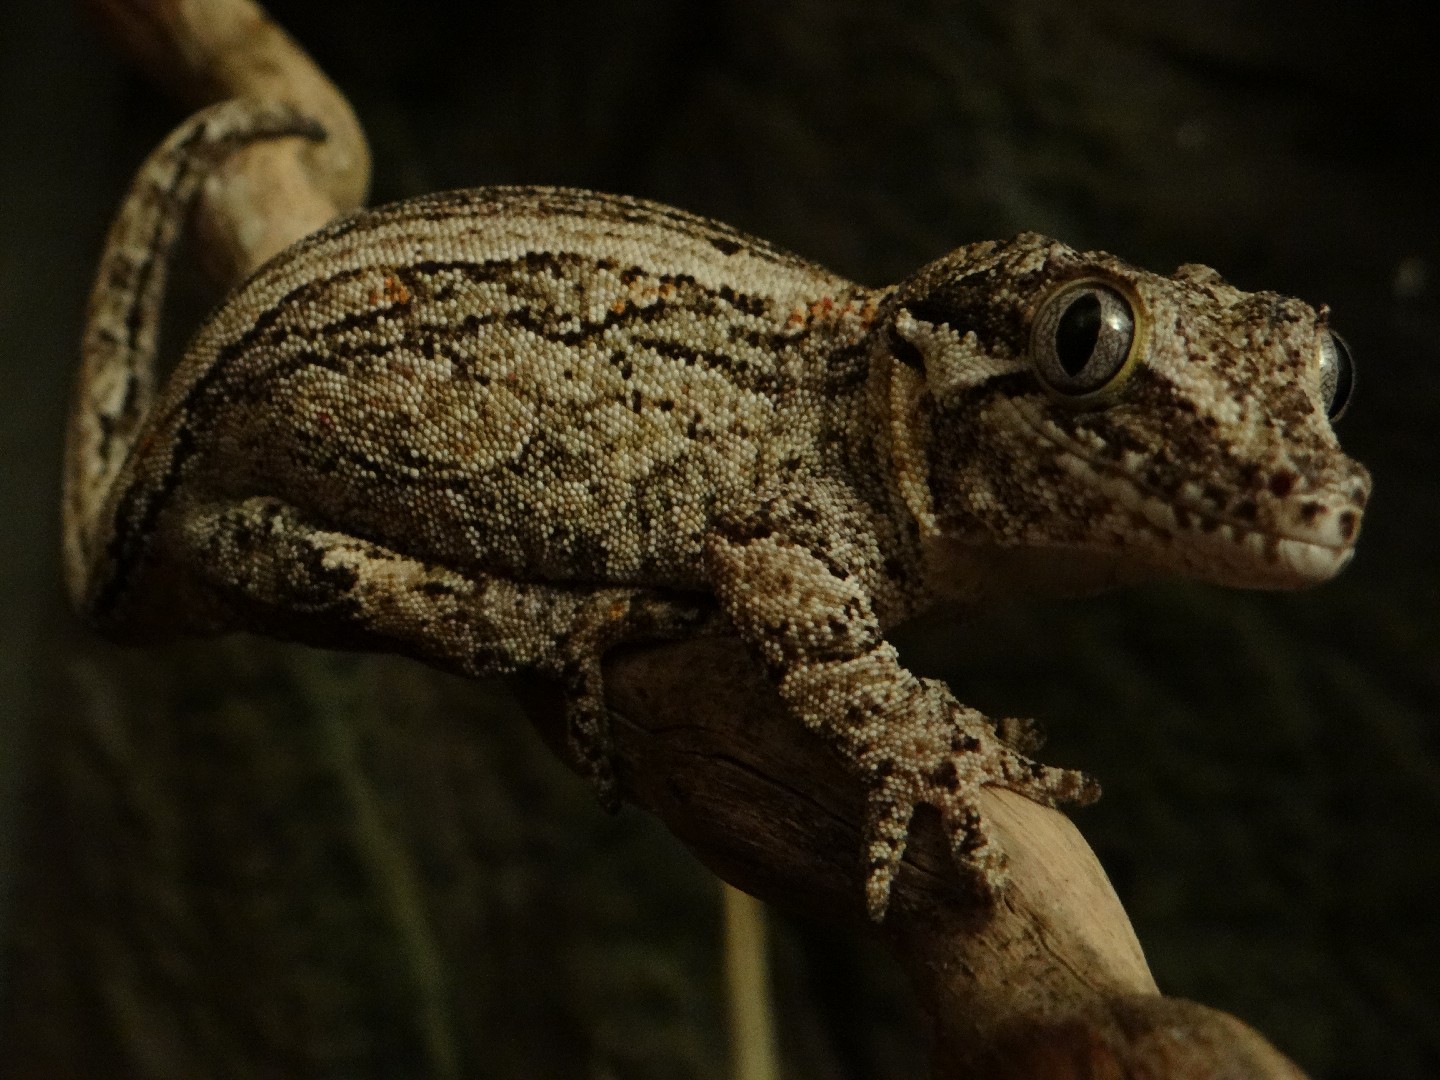 Knob-headed giant geckos (Rhacodactylus)